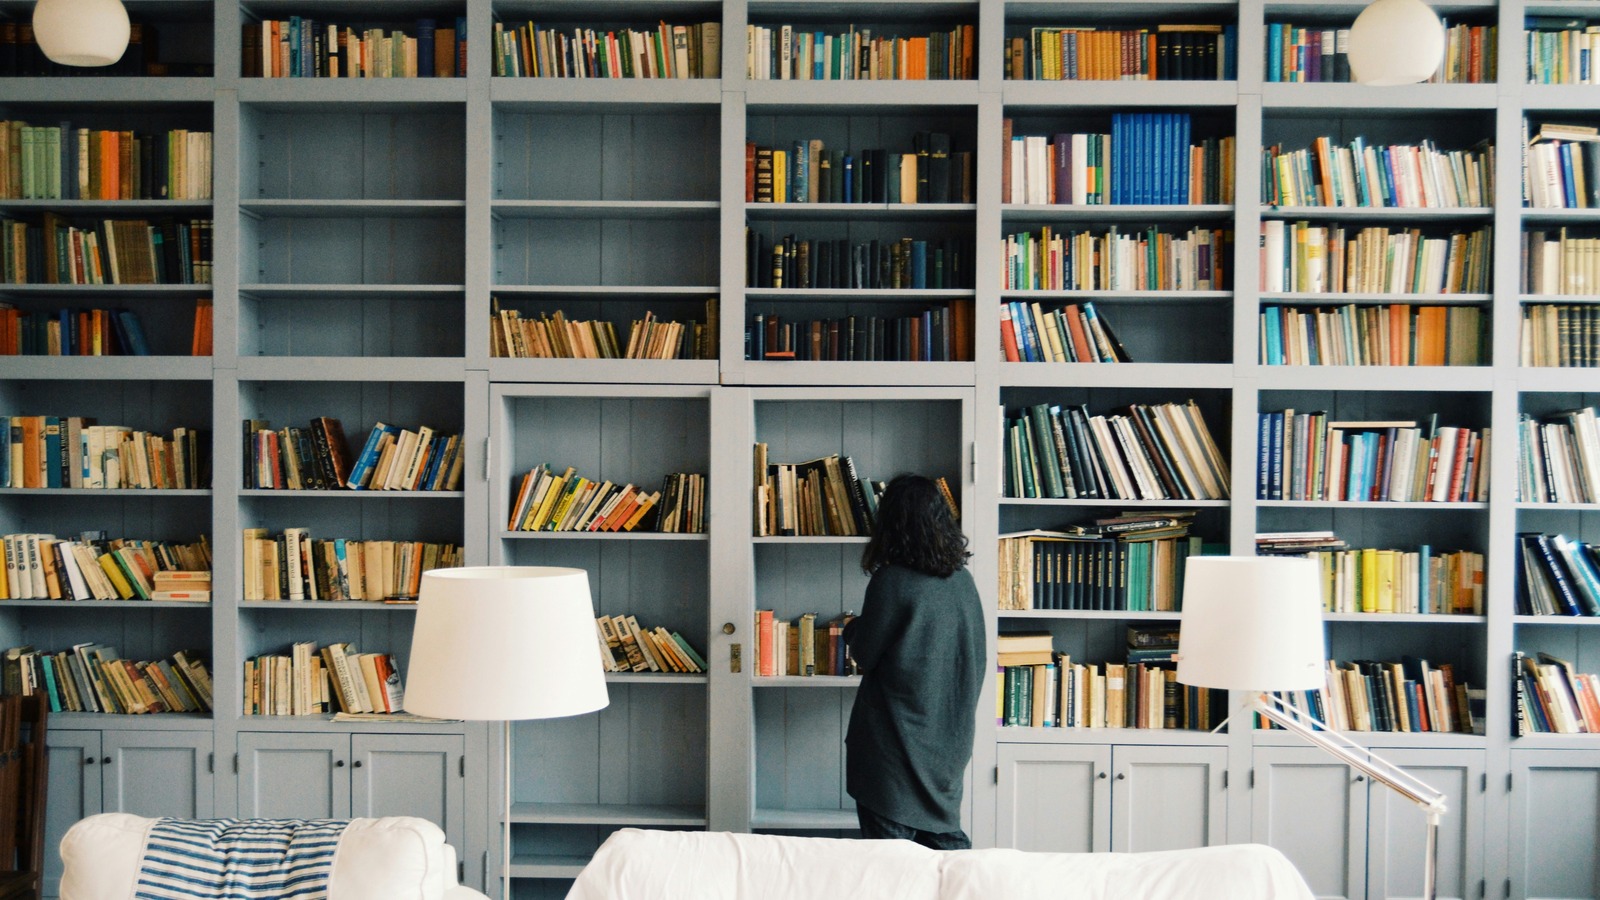 How to Achieve the 'Bookshelf Wealth' Design Aesthetic